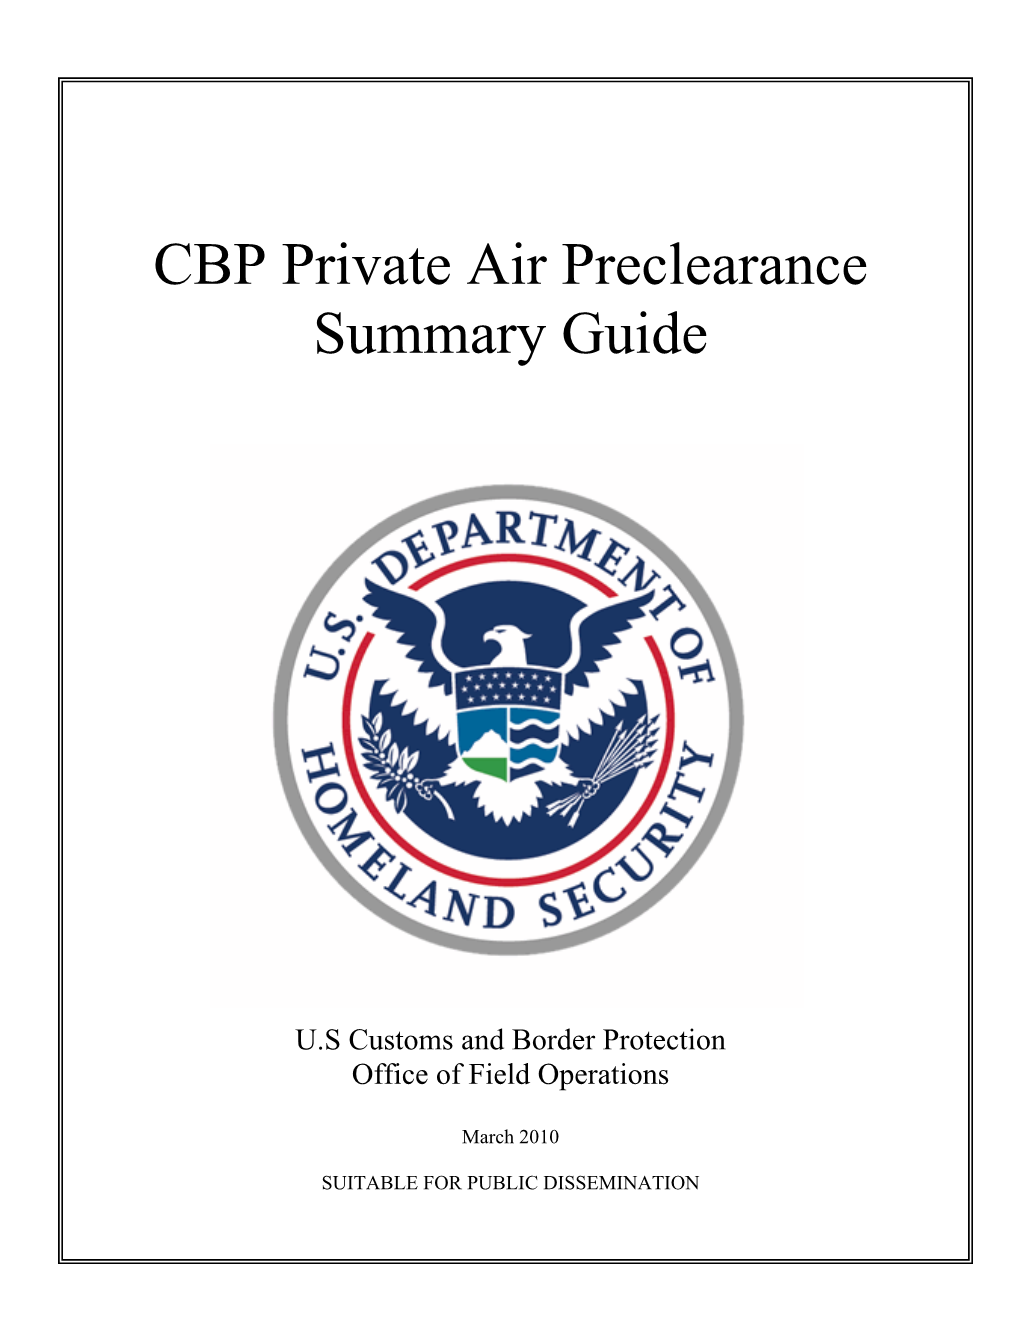 CBP Private Air Preclearance Summary Guide